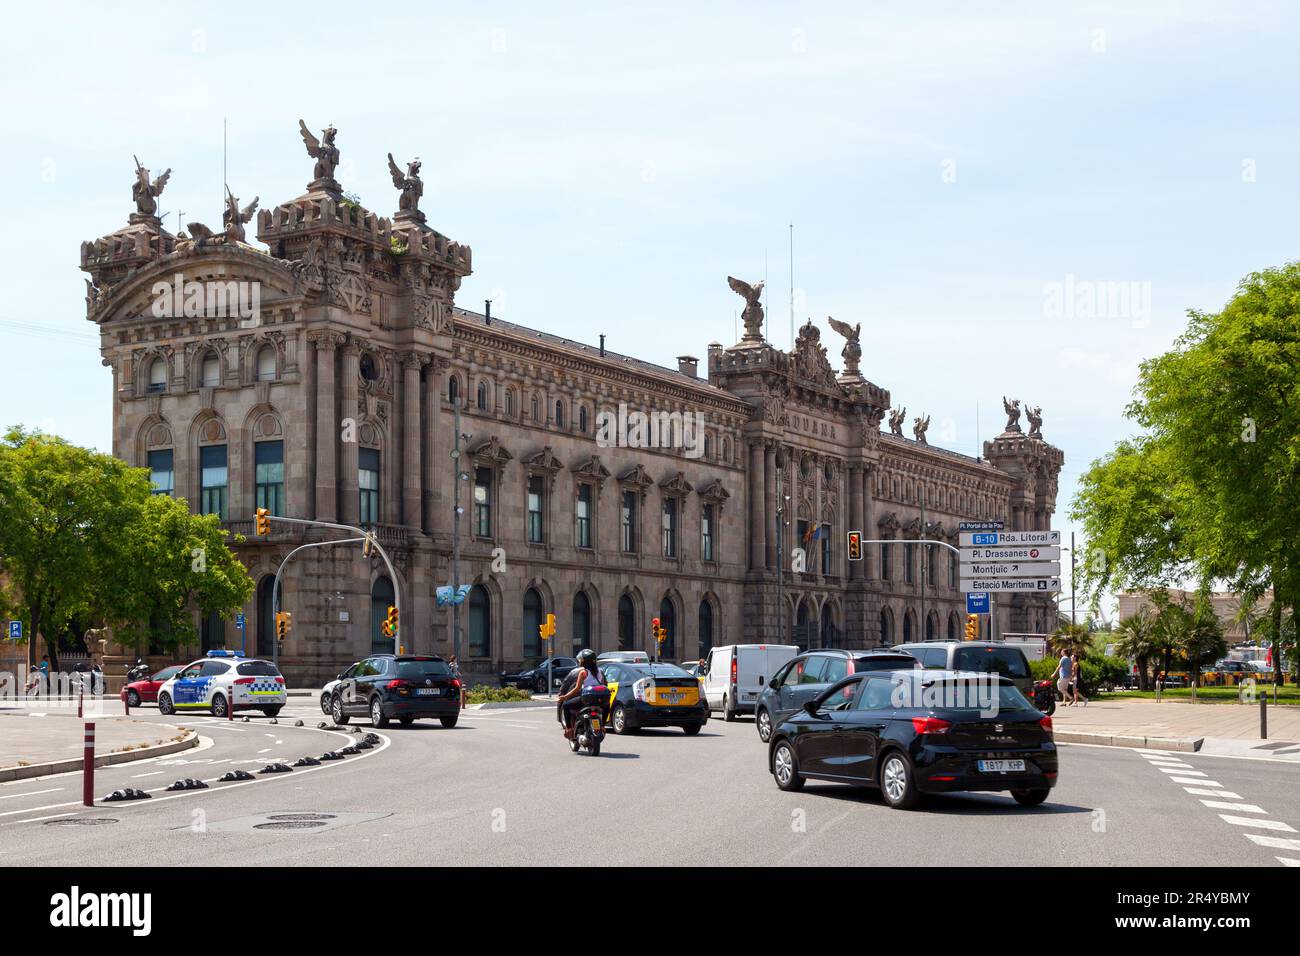 Barcelona, Spanien - Juni 08 2018: Die Staatliche Steuerbehörde (Katalanisch: Agència Estatal d'Administració Tributària) wenige Meter vom mir entfernt Stockfoto